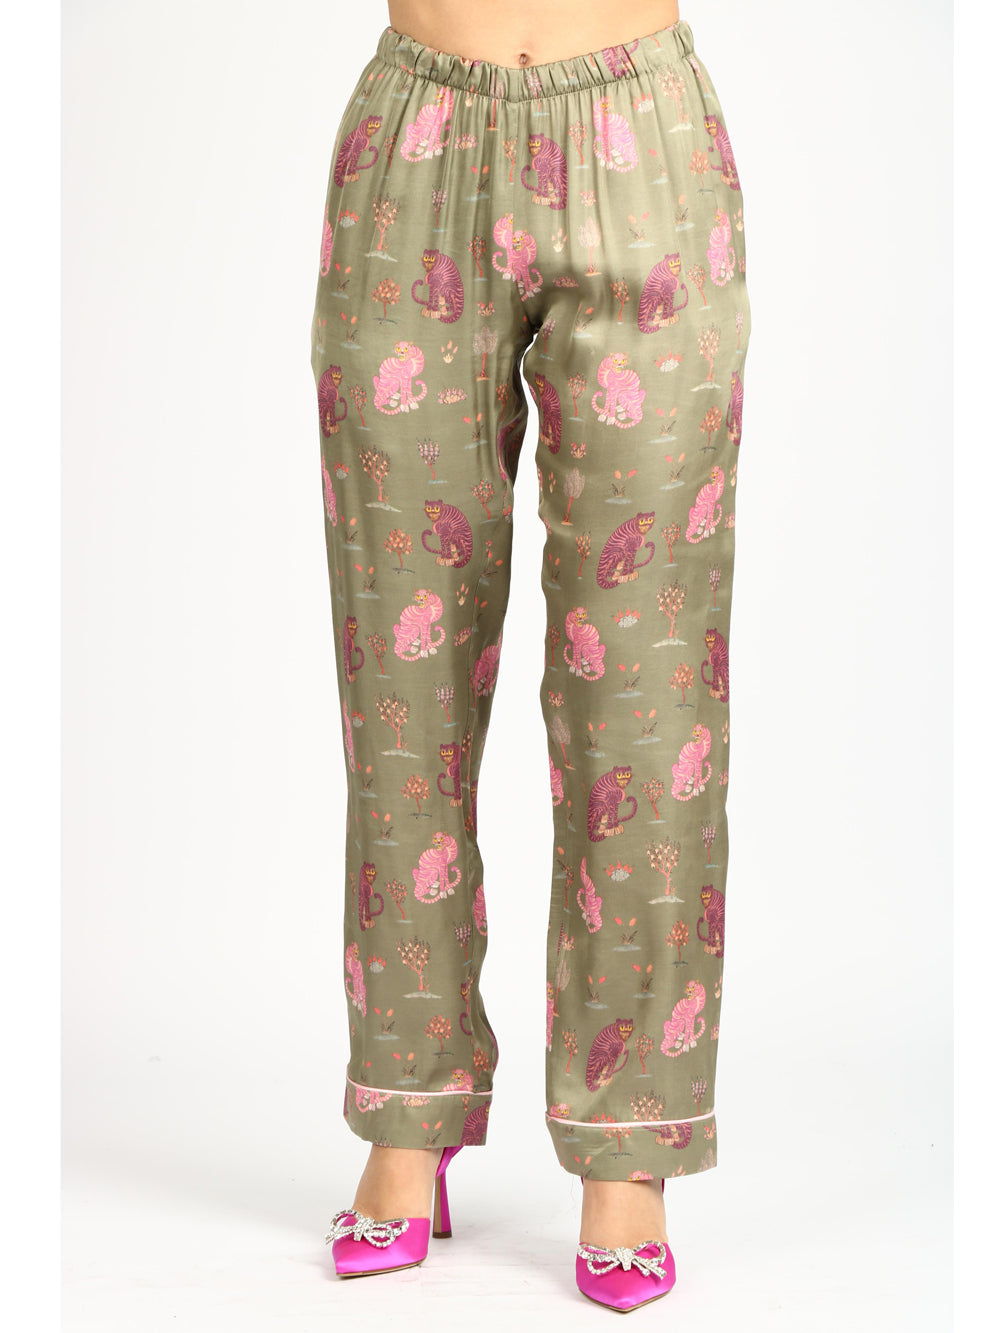 LISA C. Pantalone Daiquiri in Seta Verde Militare con Tigri Rosa Verde/rosa